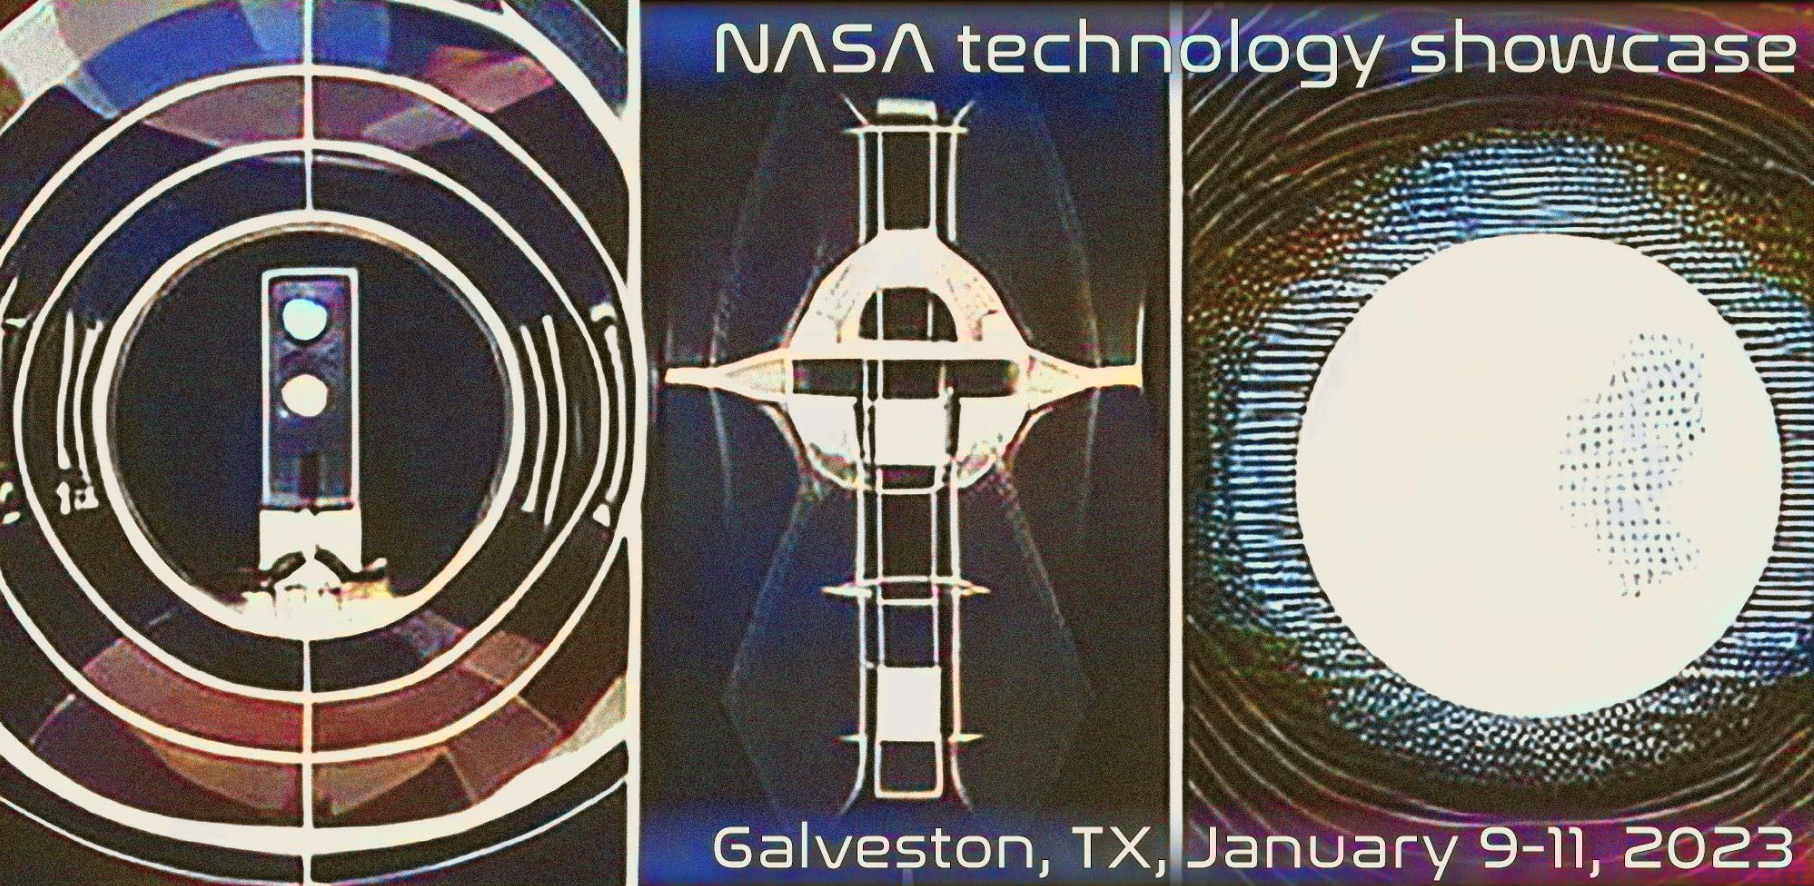 NASA Technology Showcase. Galveston, TX, January 9-11, 2023